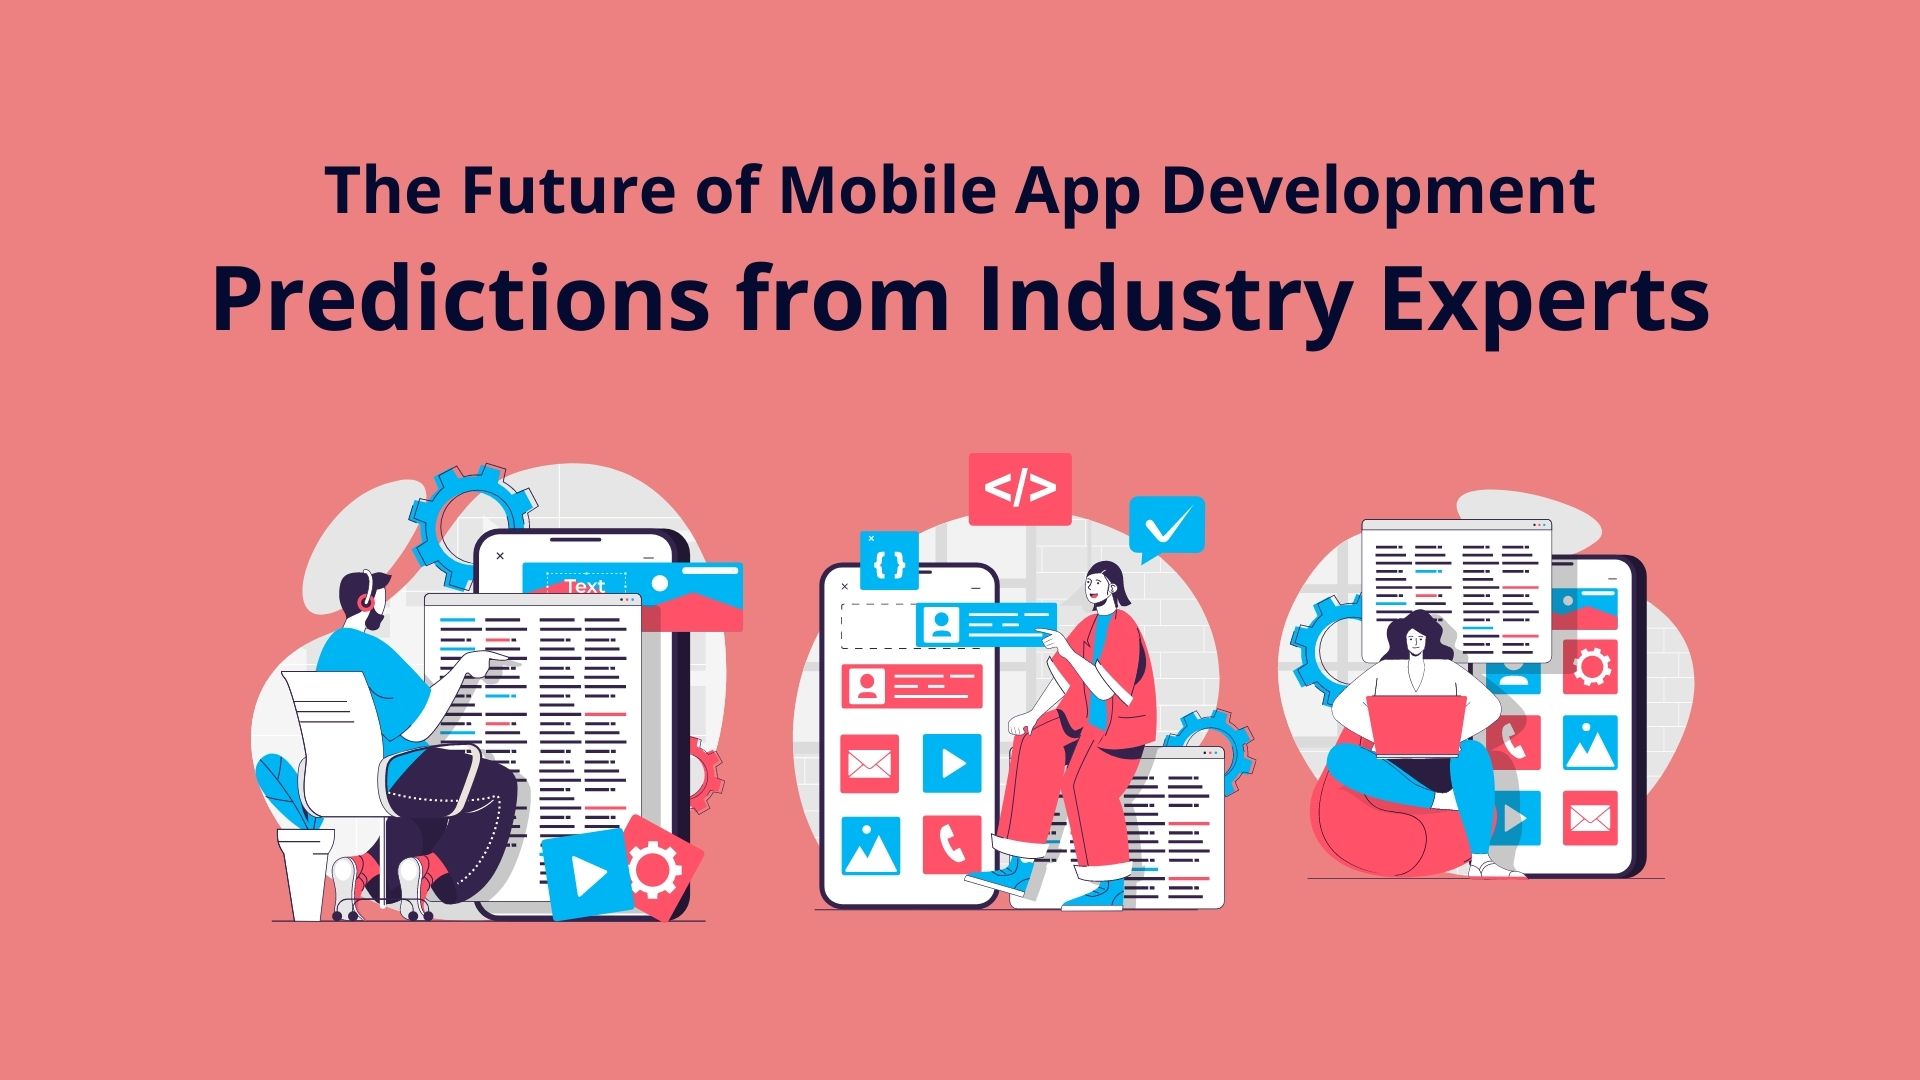 Design of mobile app development